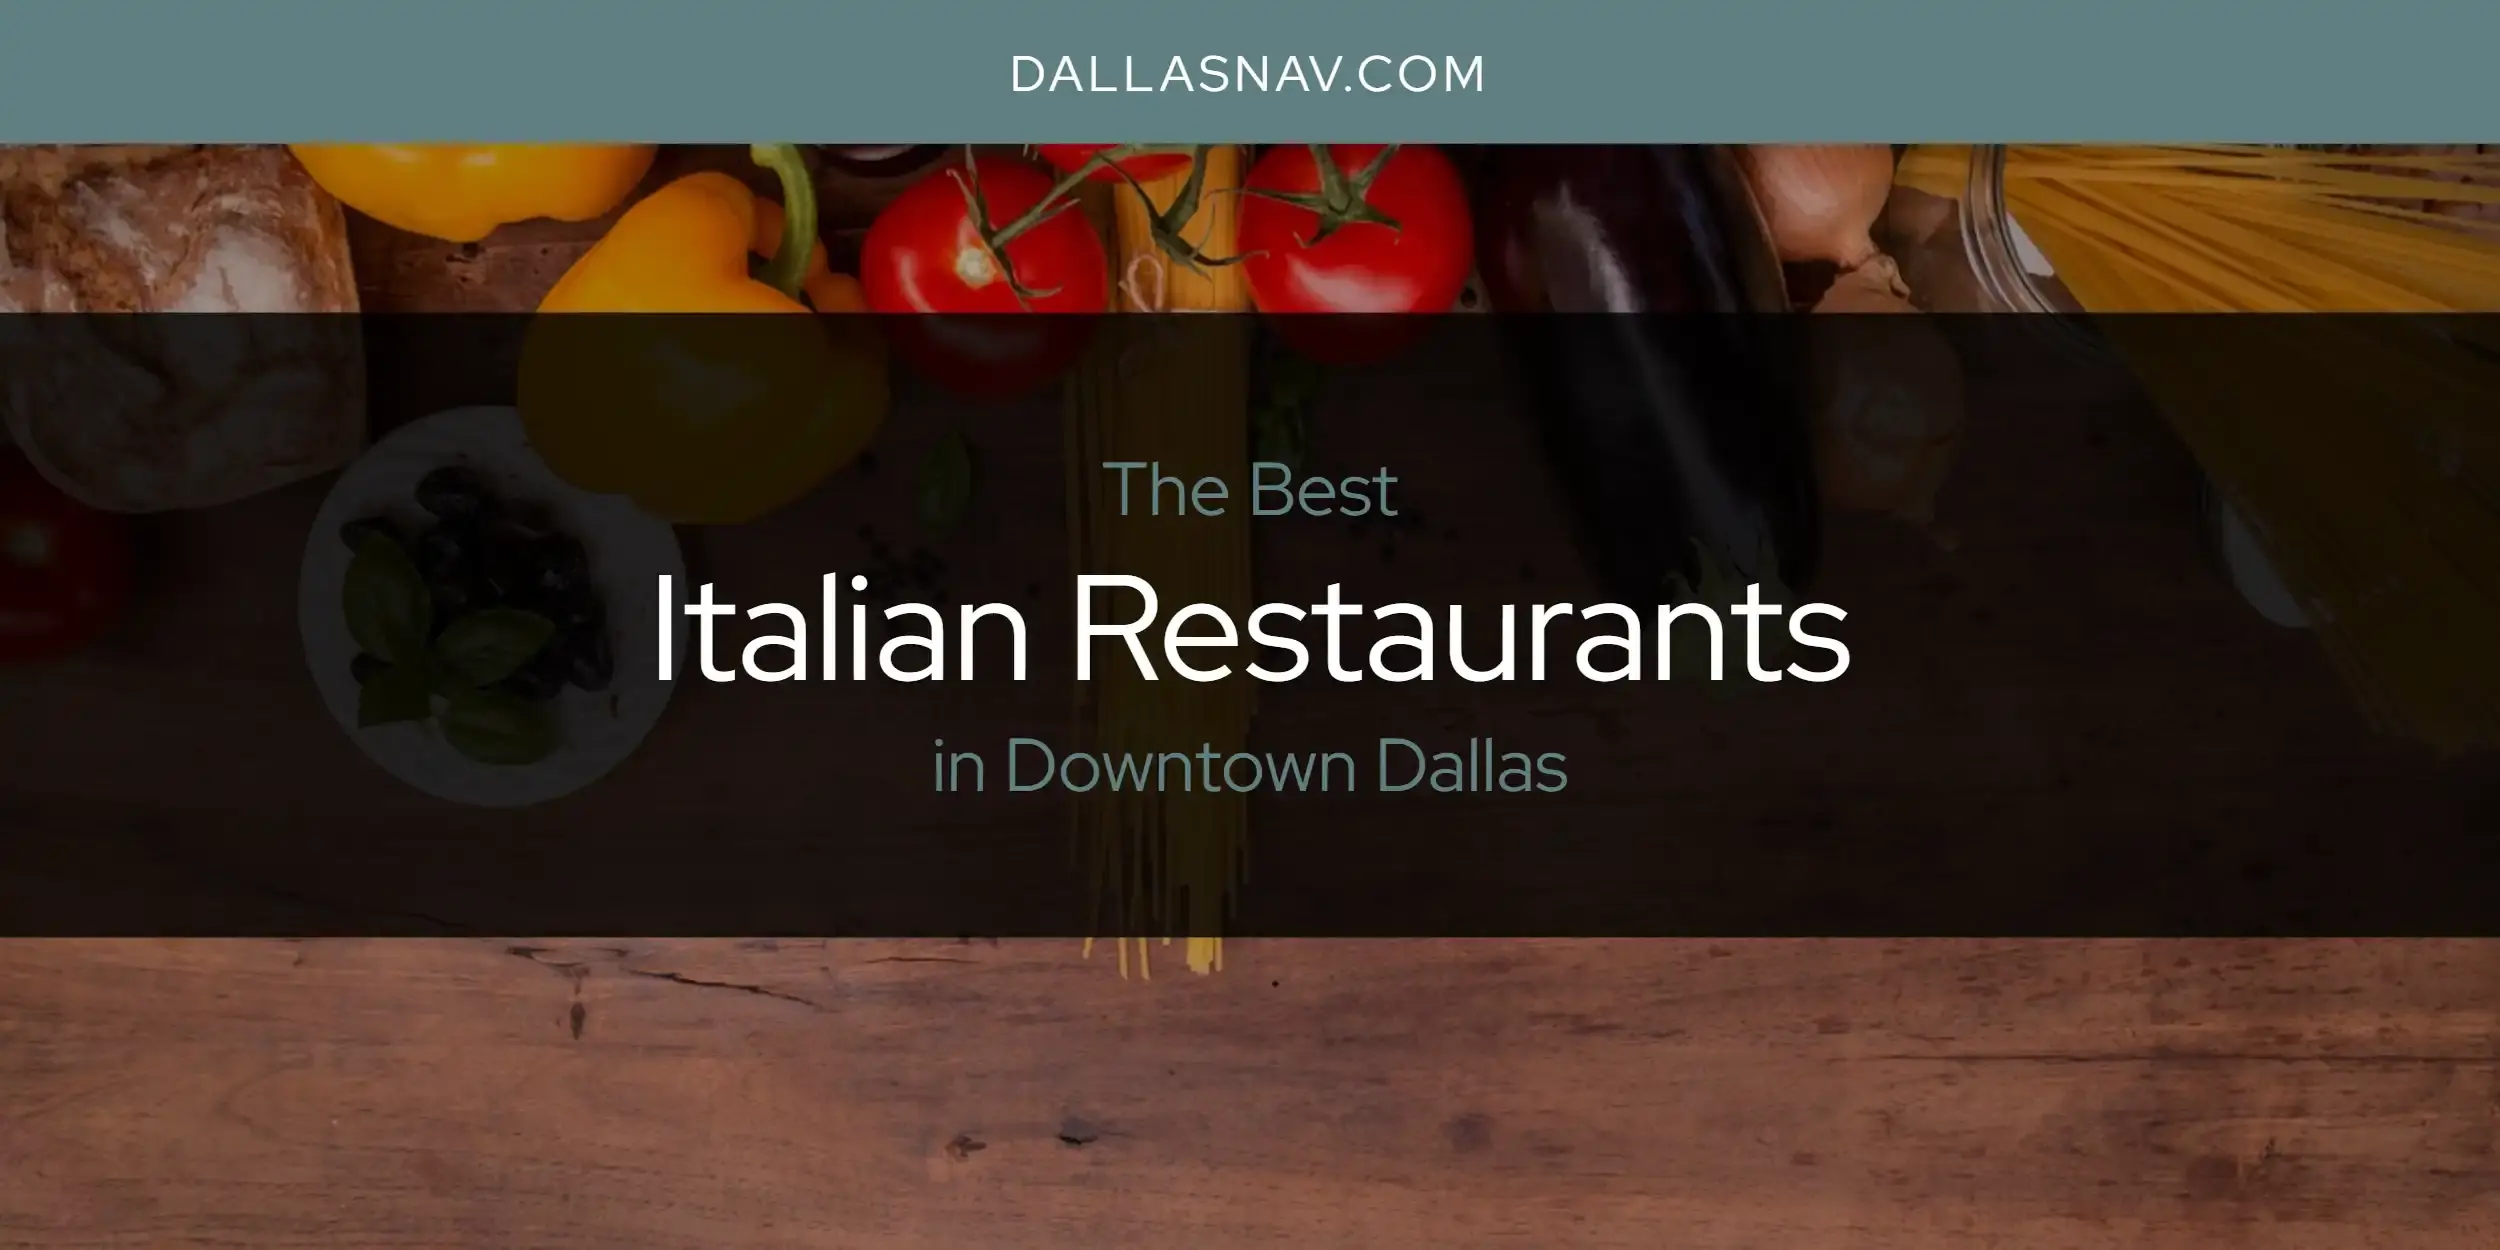 Best Italian Restaurants in Downtown Dallas? Here's the Top 6